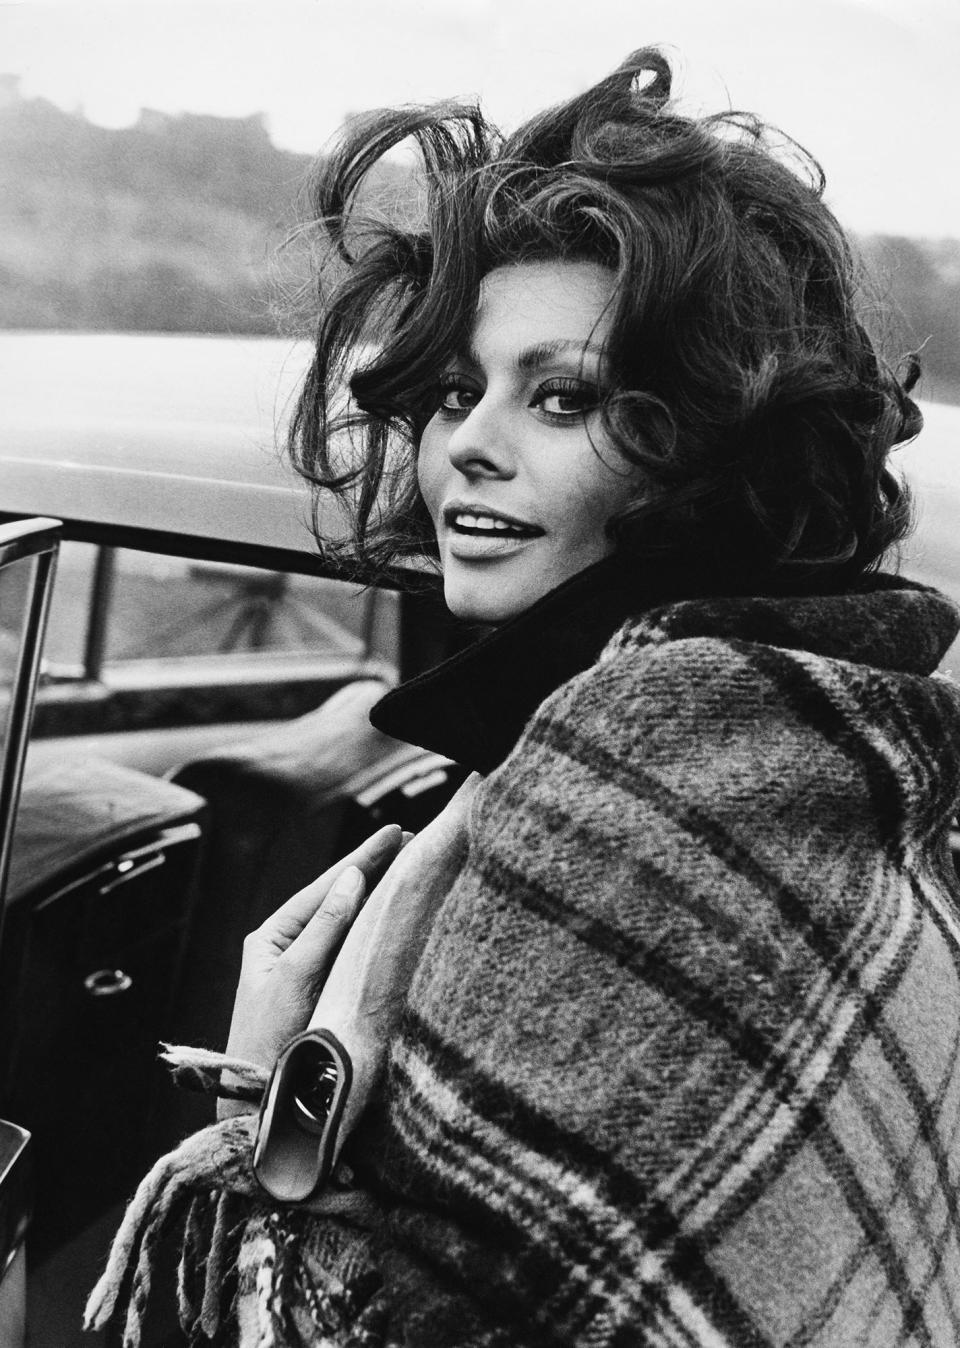 From Sophia Loren to Fellini muse Claudia Cardinale, these striking Italian women are legendary for good reason.